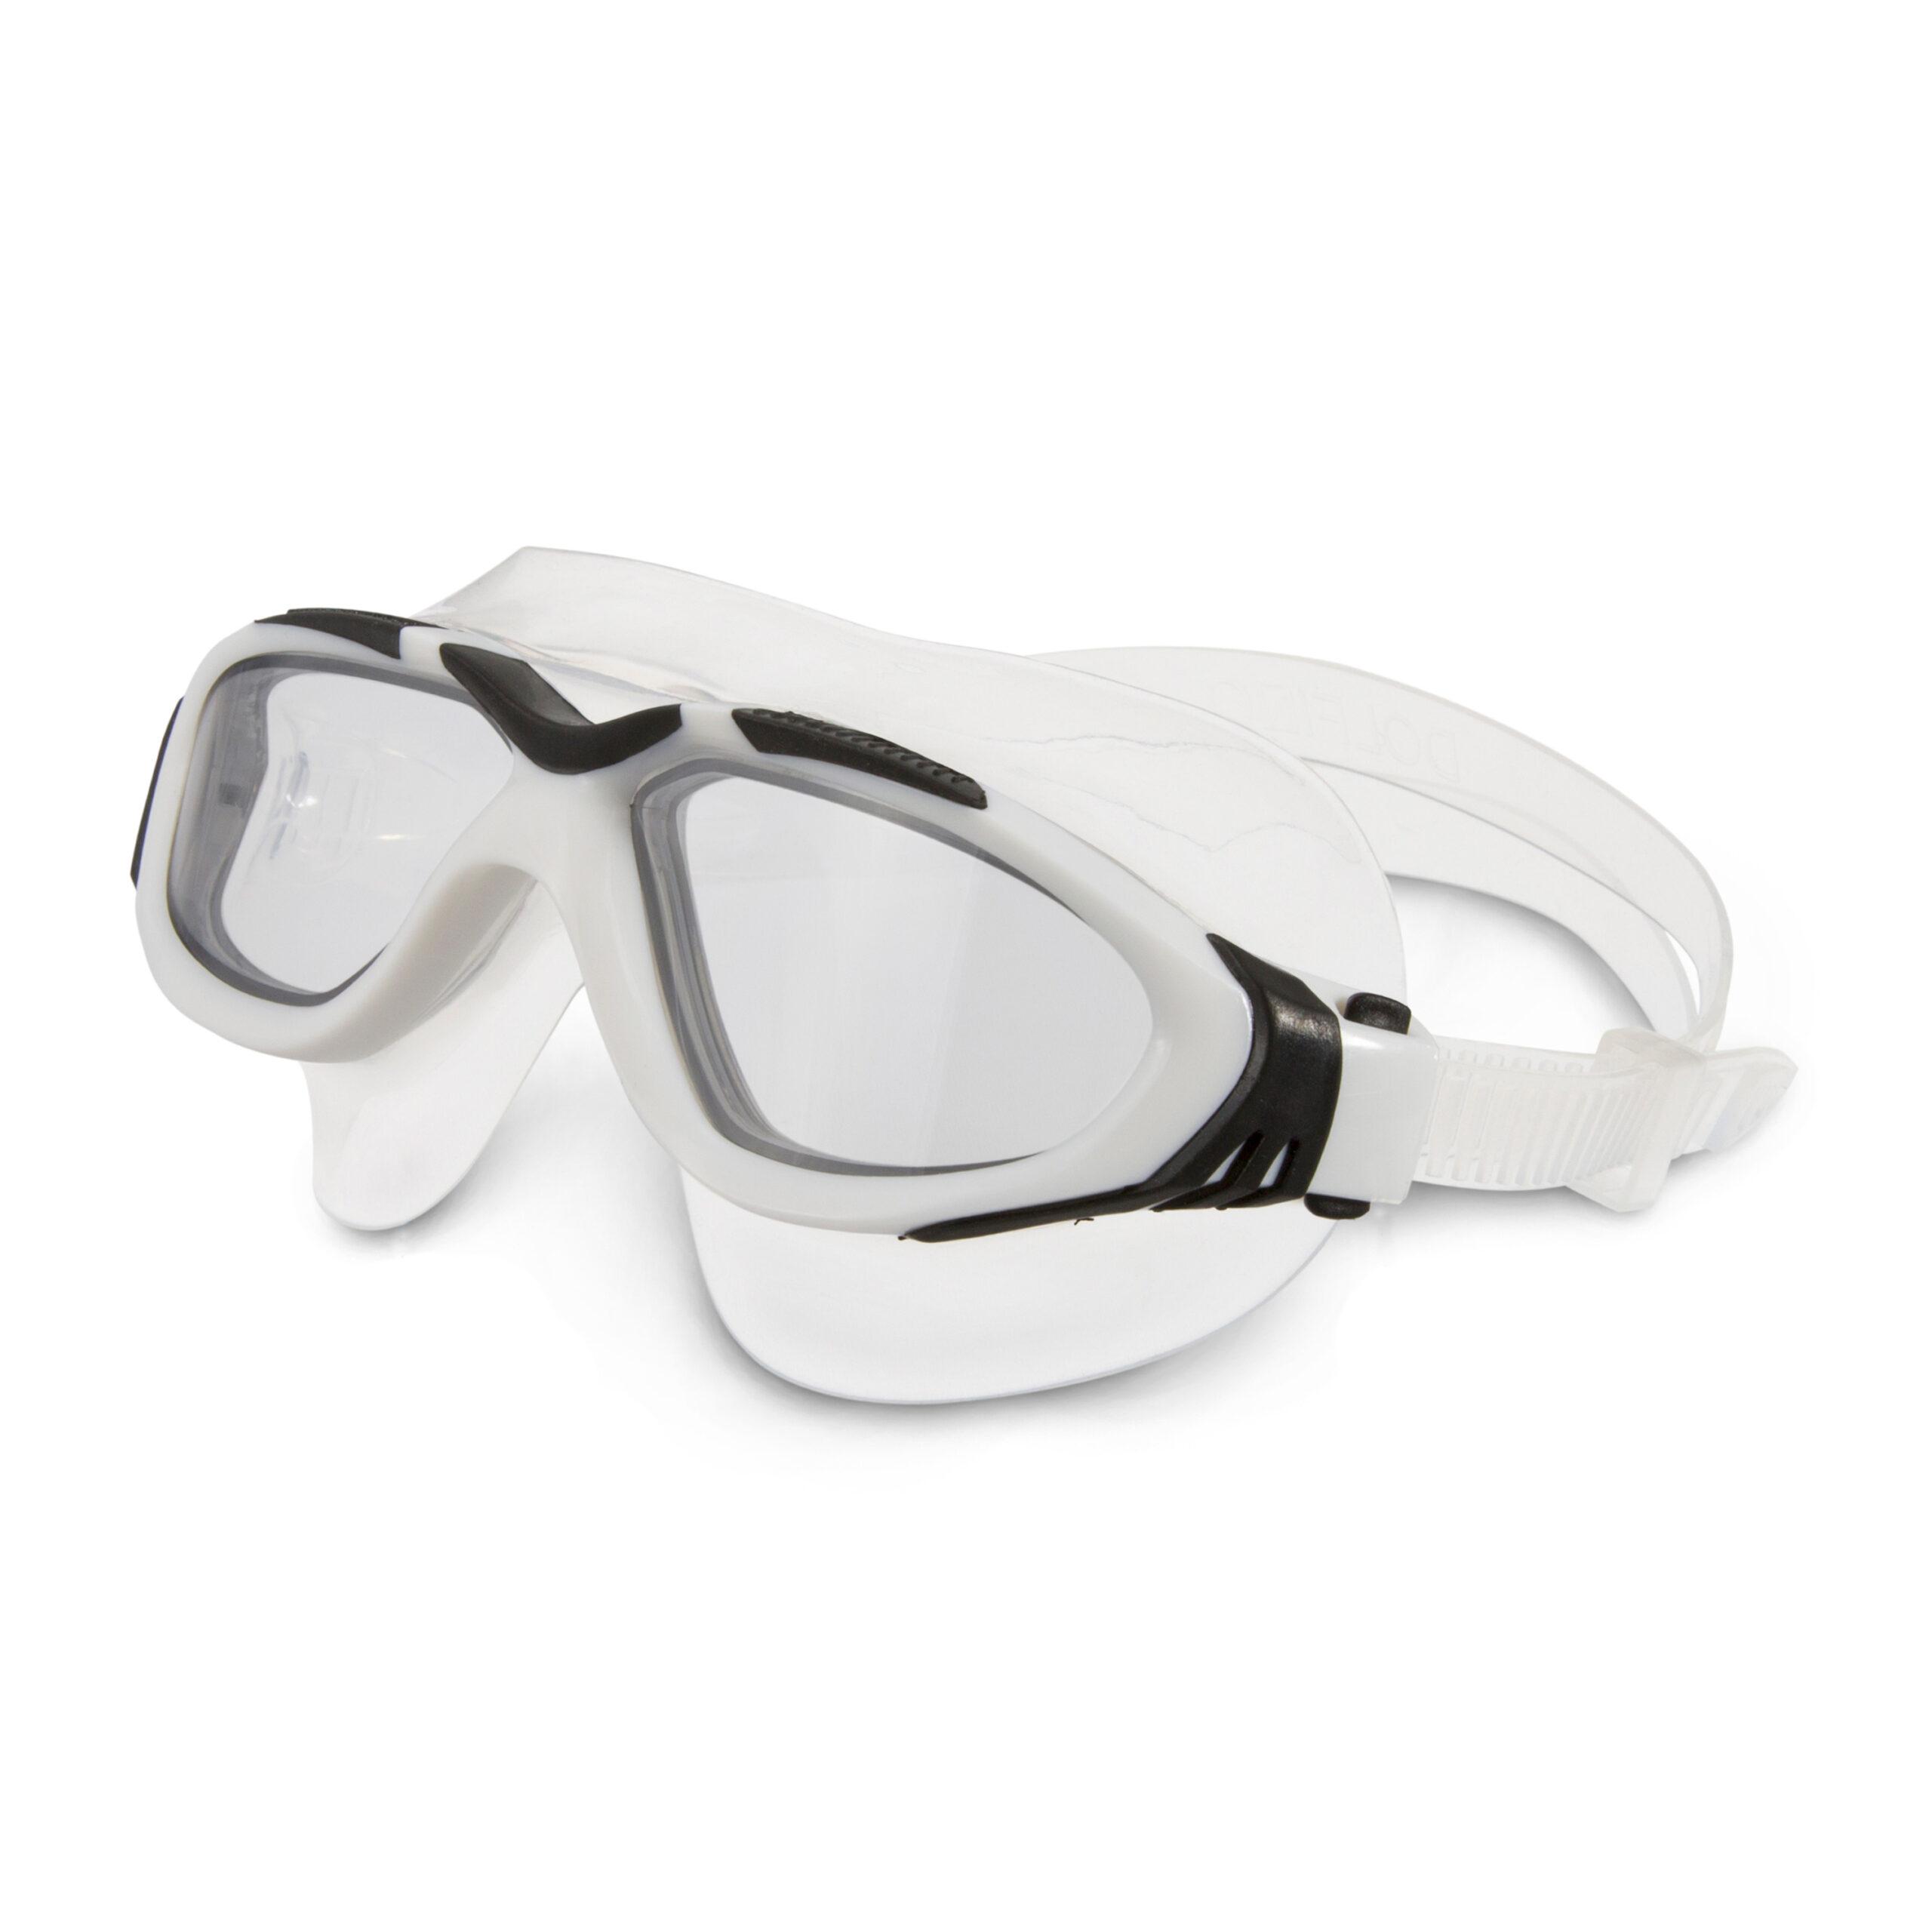 Product Swimming Protective Gear | Dolfino Professional Goggles image